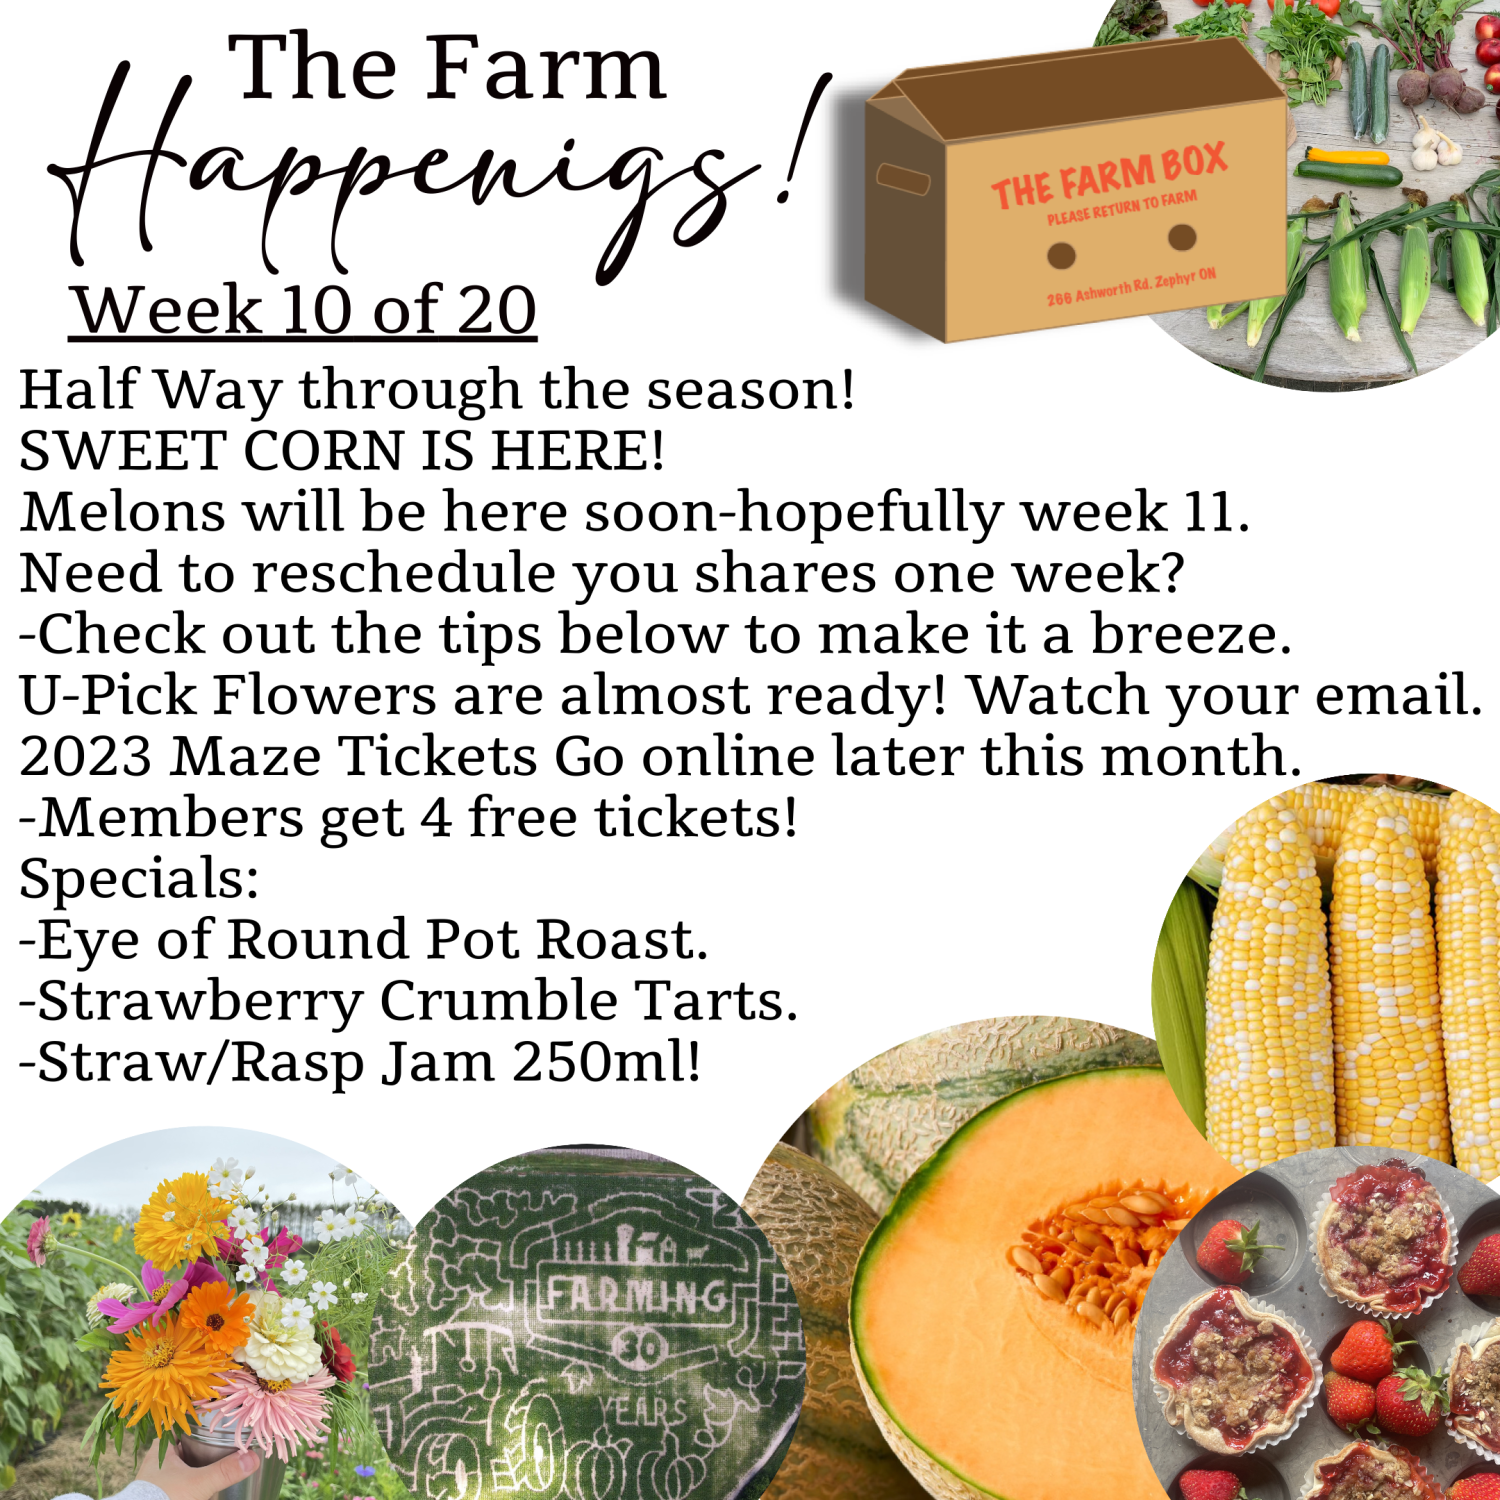 Next Happening: "The Farm Box"-Coopers CSA Farm Farm Happenings Week 10